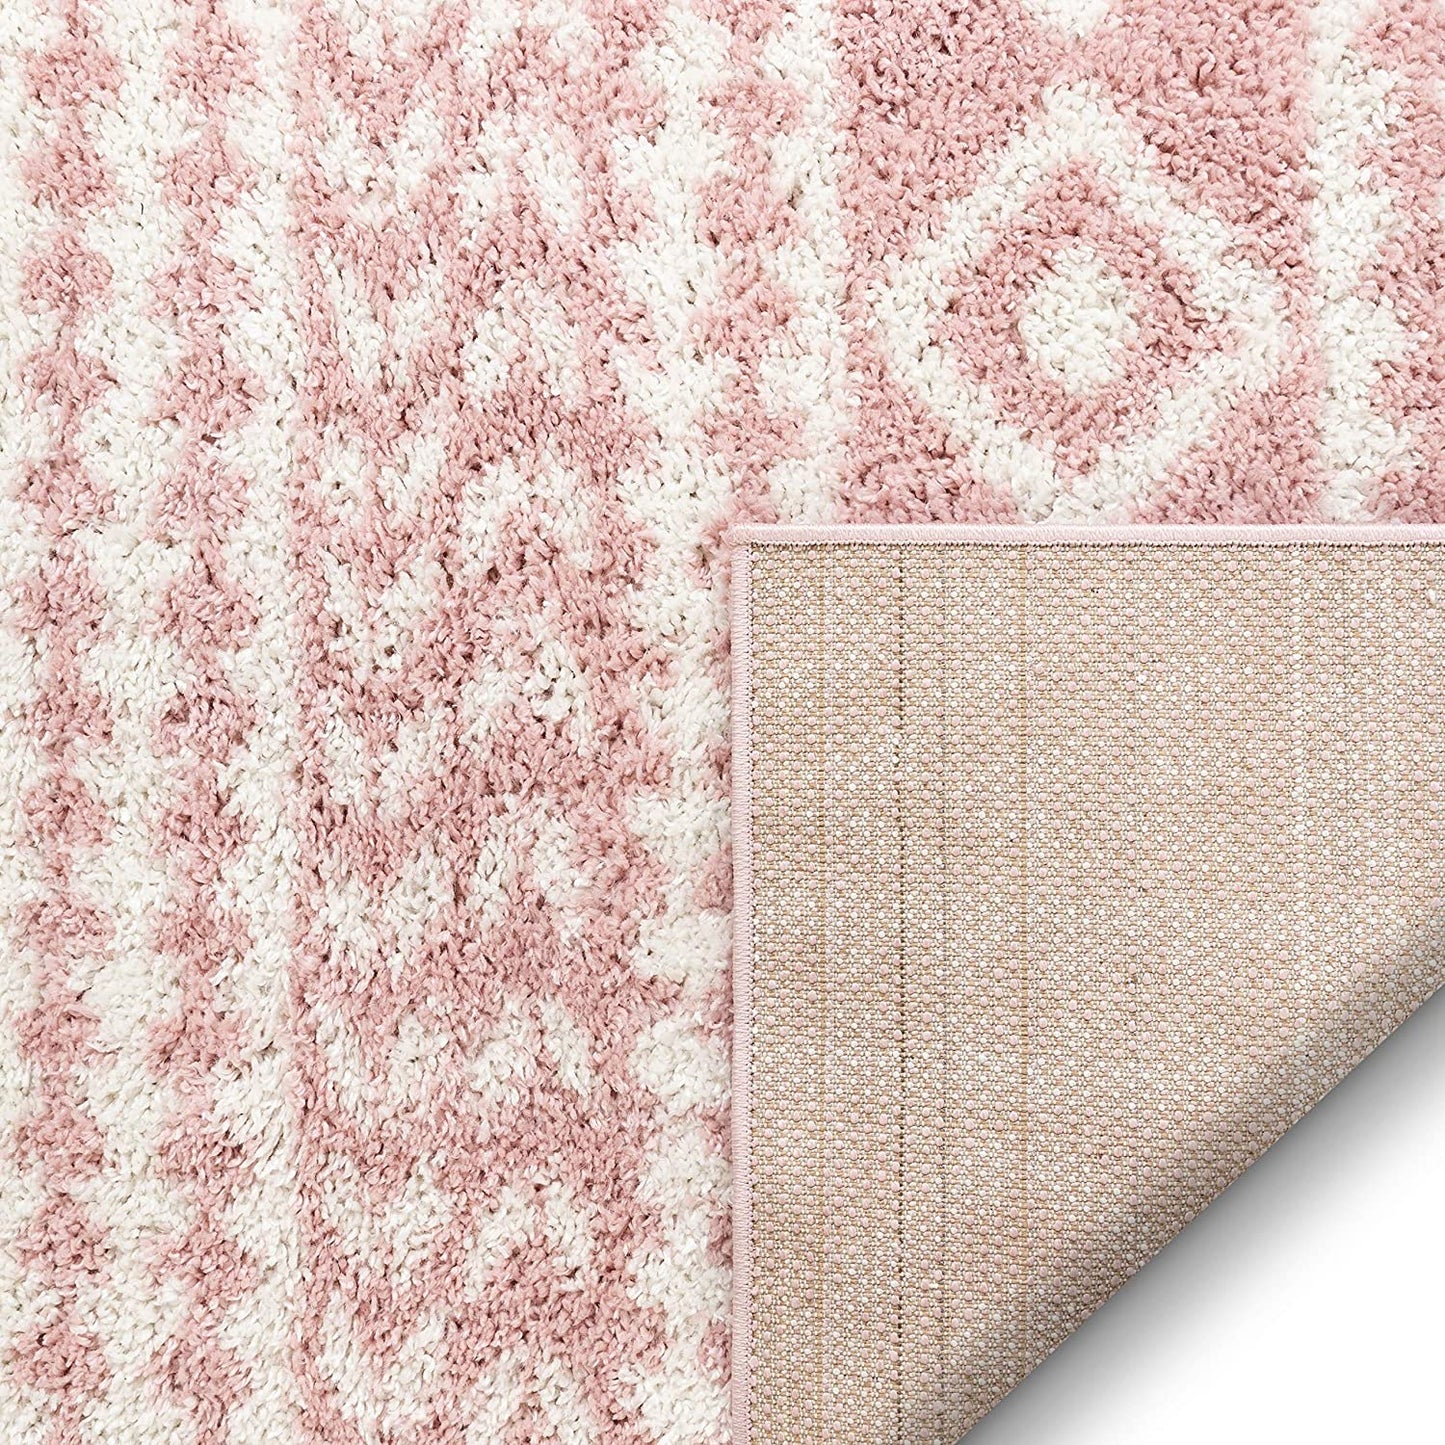 Tribal Diamond Stripes Pink Soft Shag Area Rug